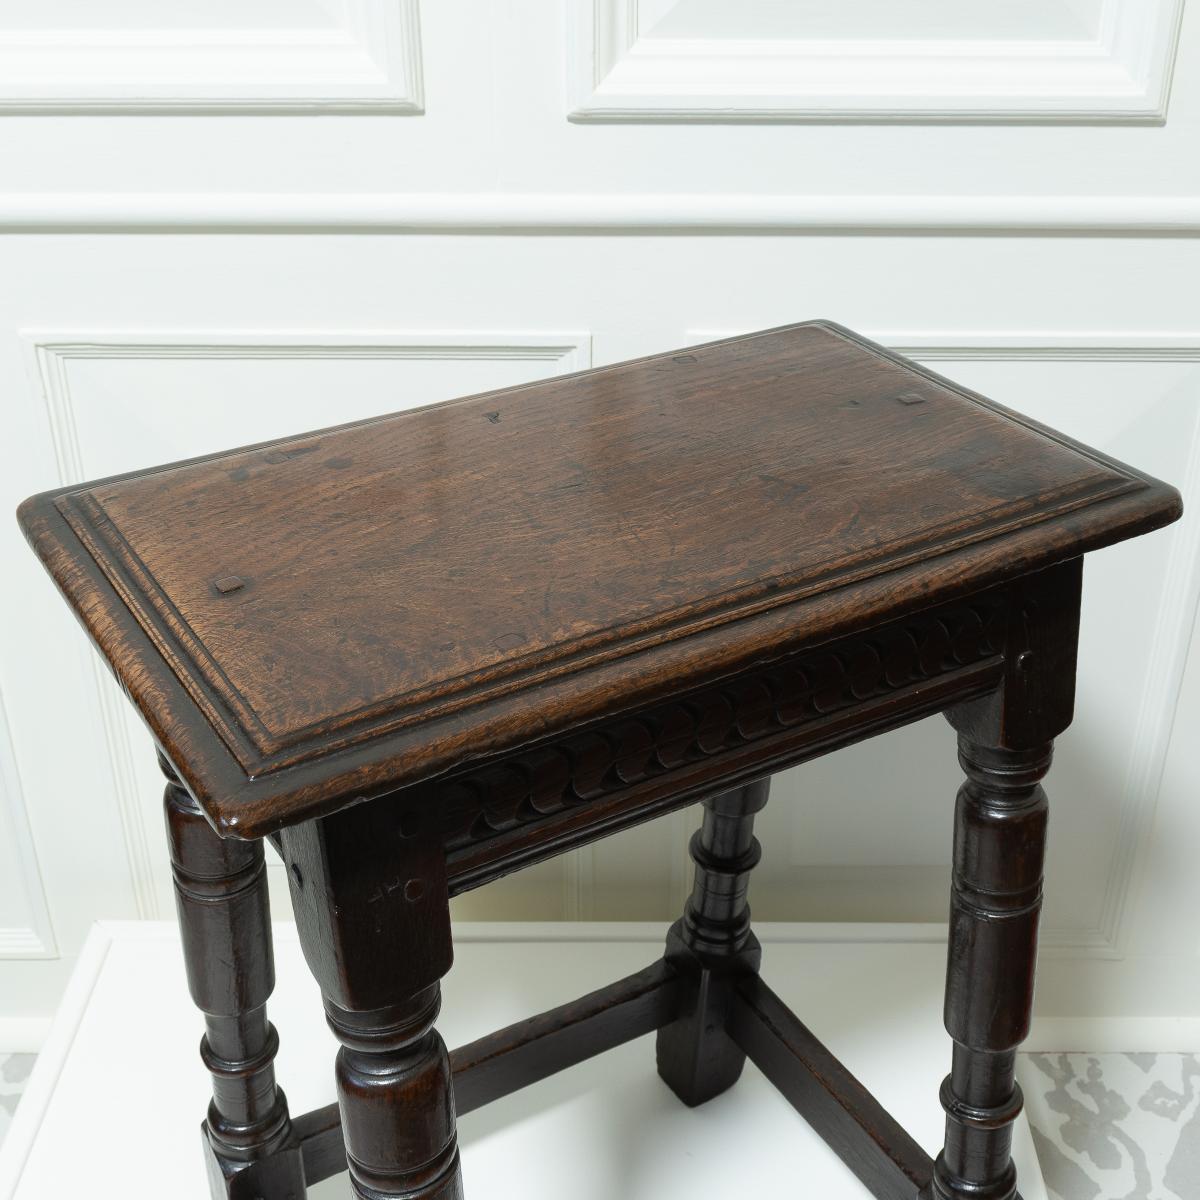 A dark oak antique four legged stool - detail of the top